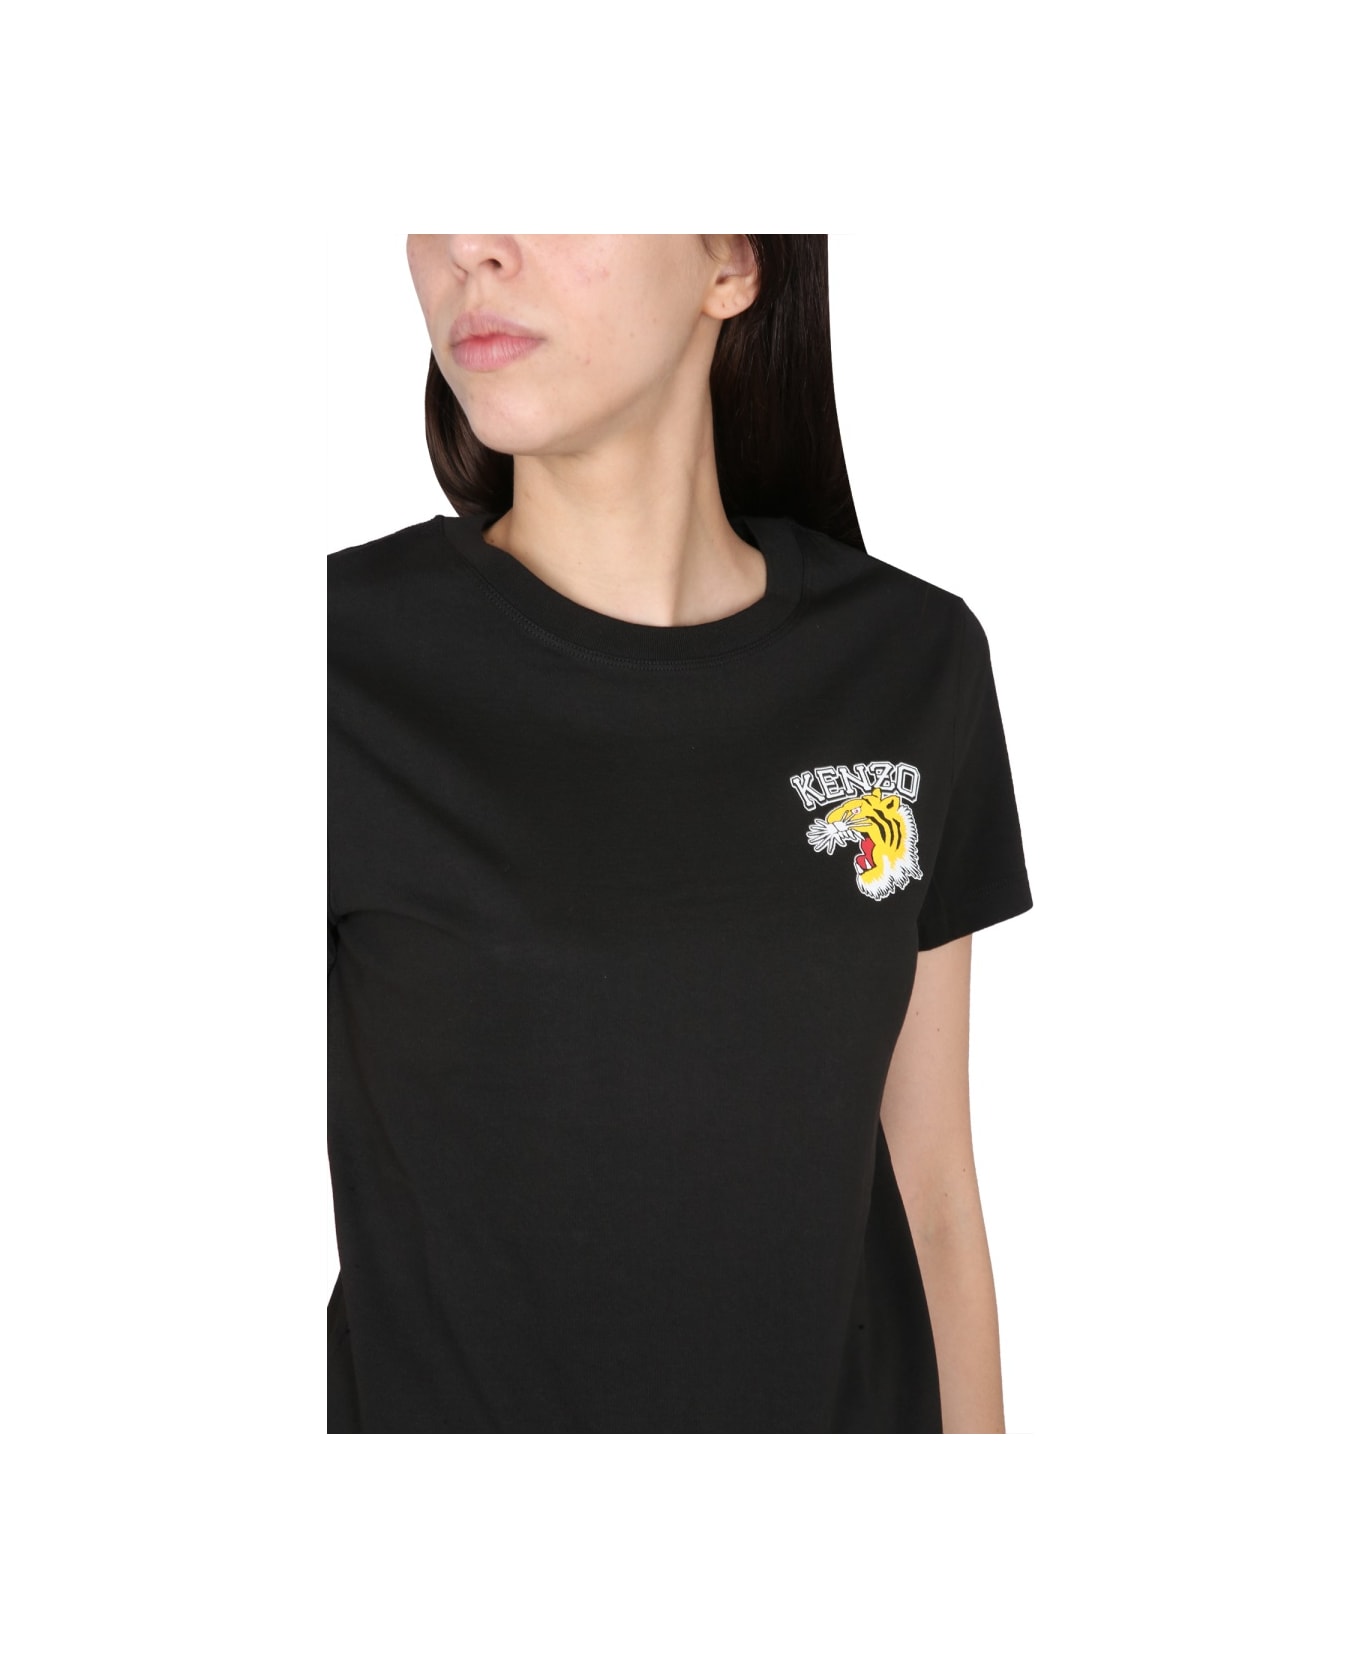 Kenzo Tiger Varsity T-shirt - BLACK